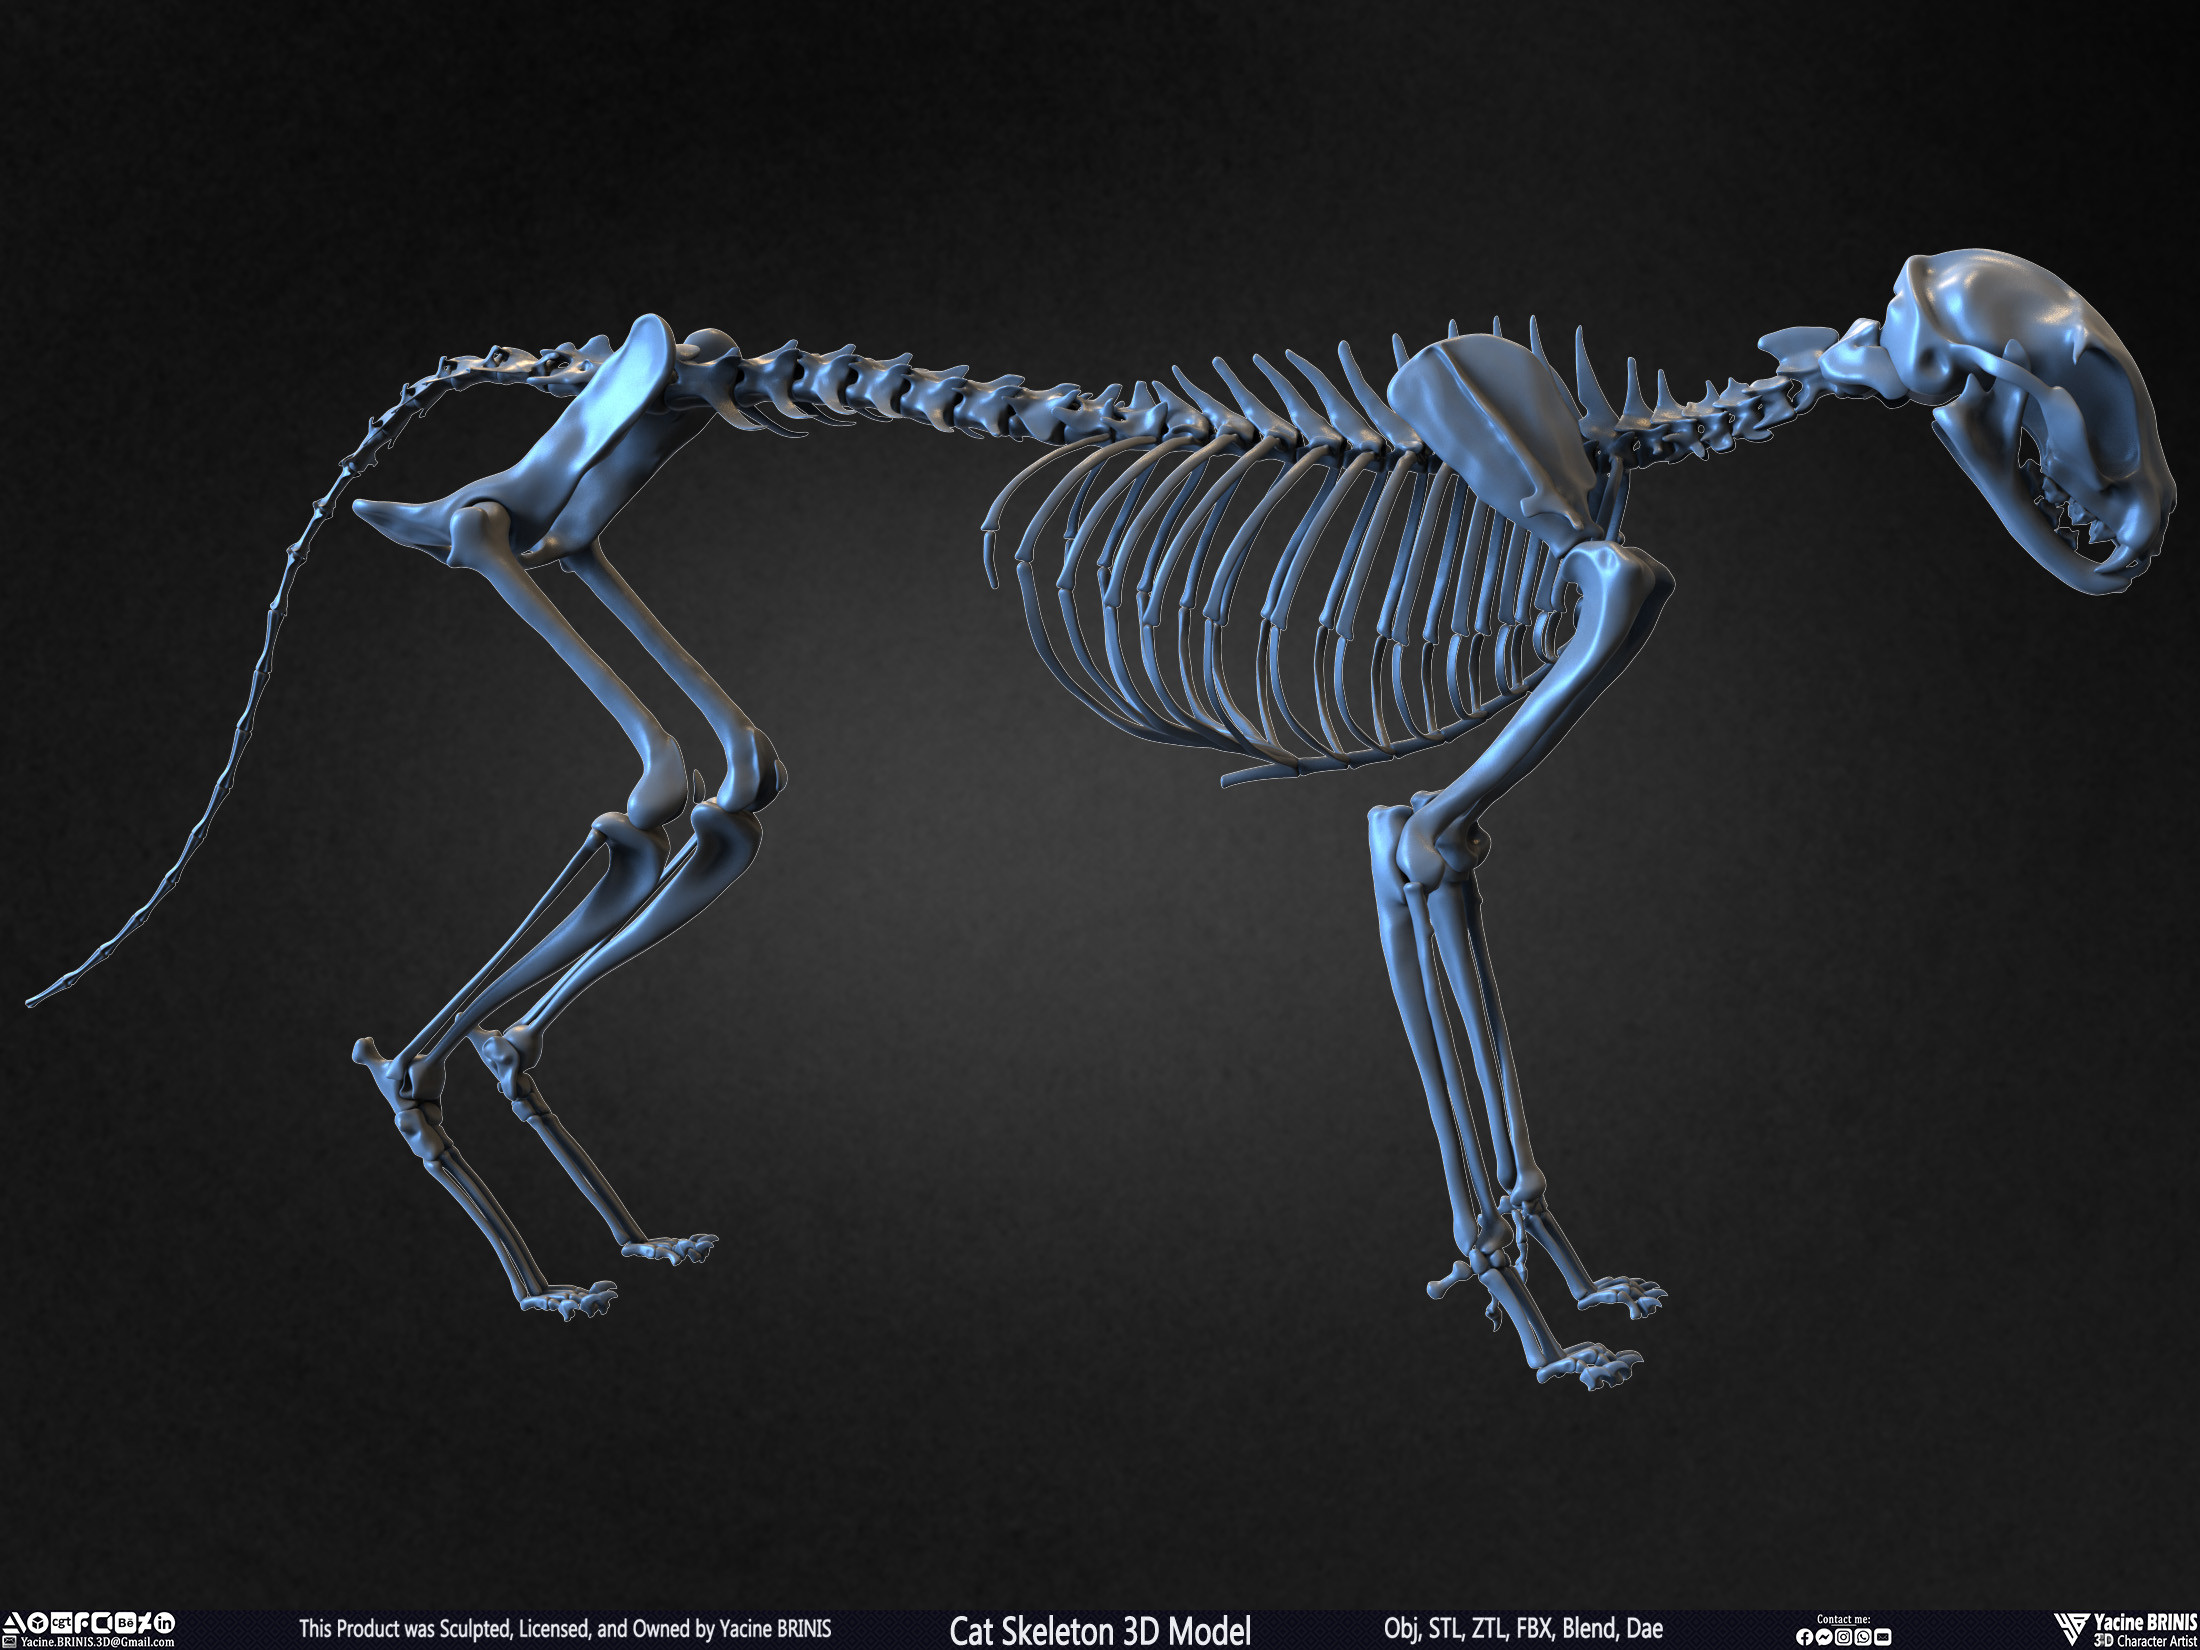 Highly Detailed Cat Skeleton 3D Model Sculpted by Yacine BRINIS Set 025